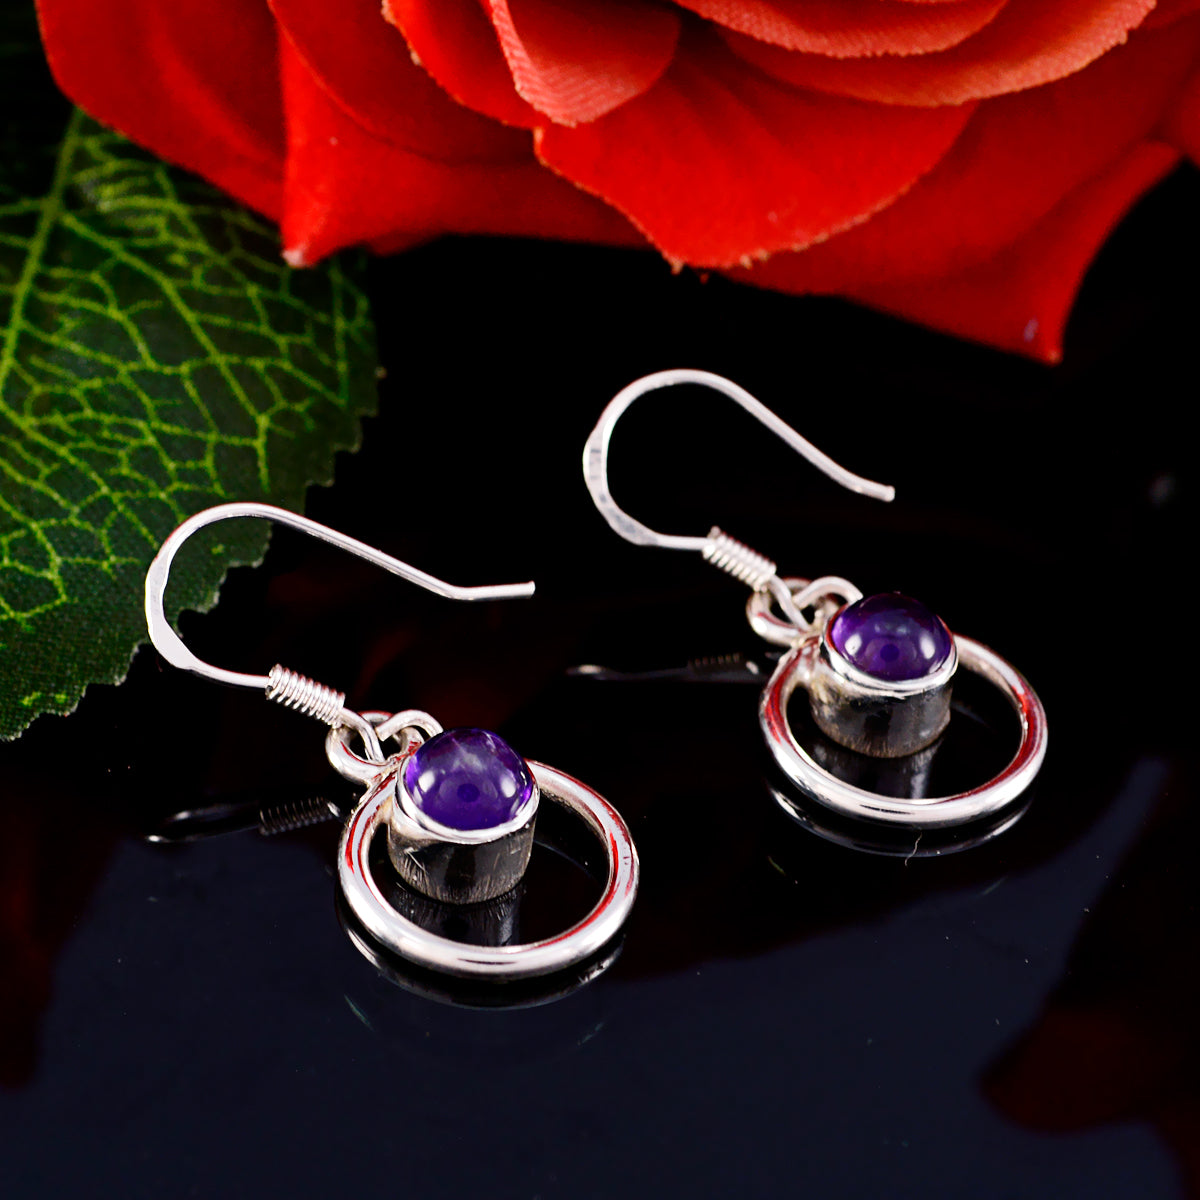 Riyo Nice Gemstone round Cabochon Purple Amethyst Silver Earrings gift for cyber Monday